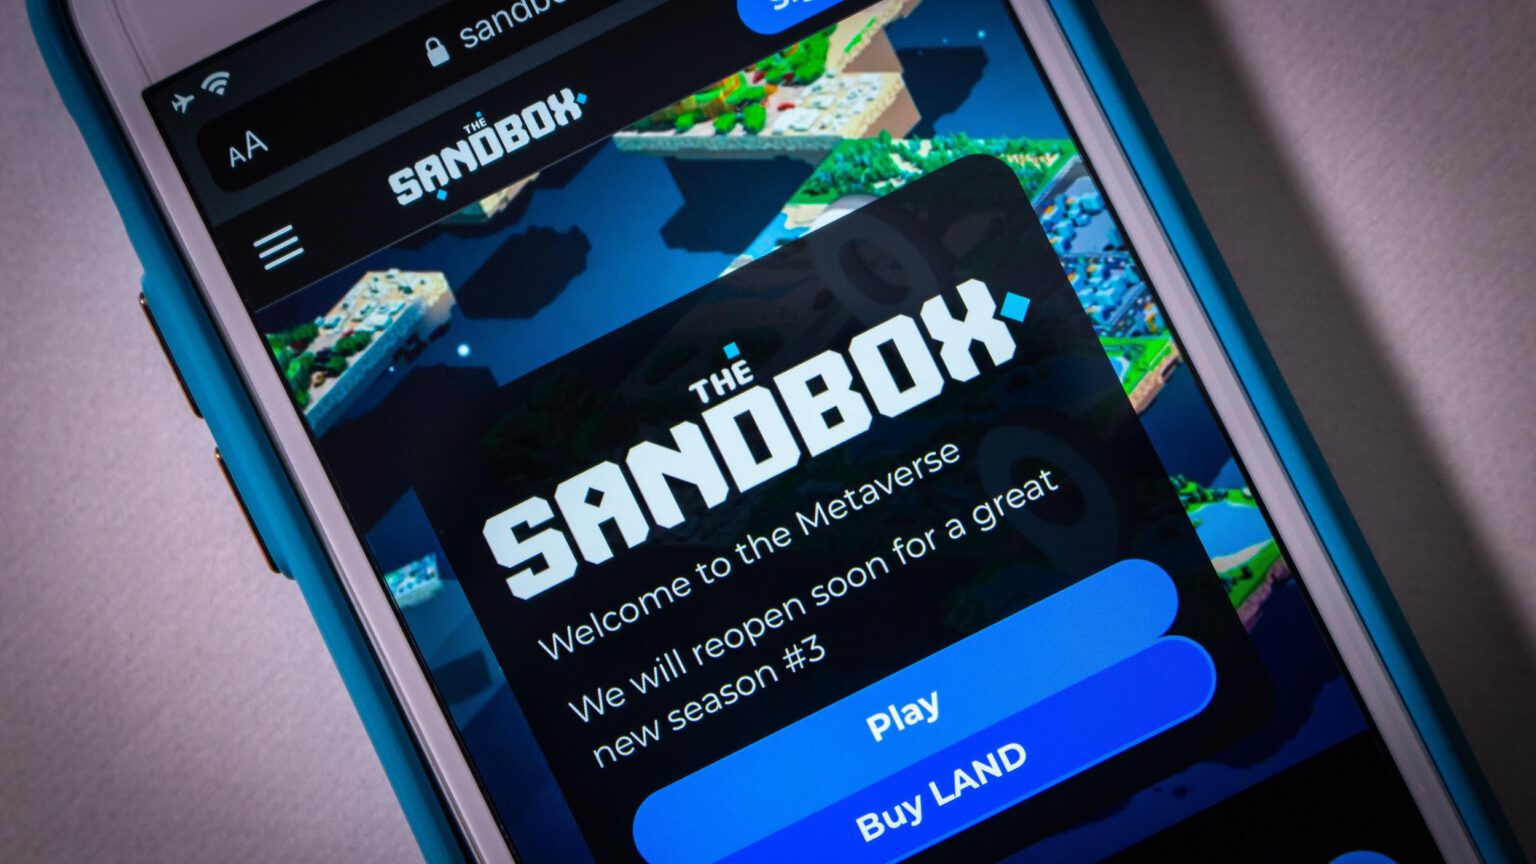 The-Sandbox-phone-1536x864.jpg